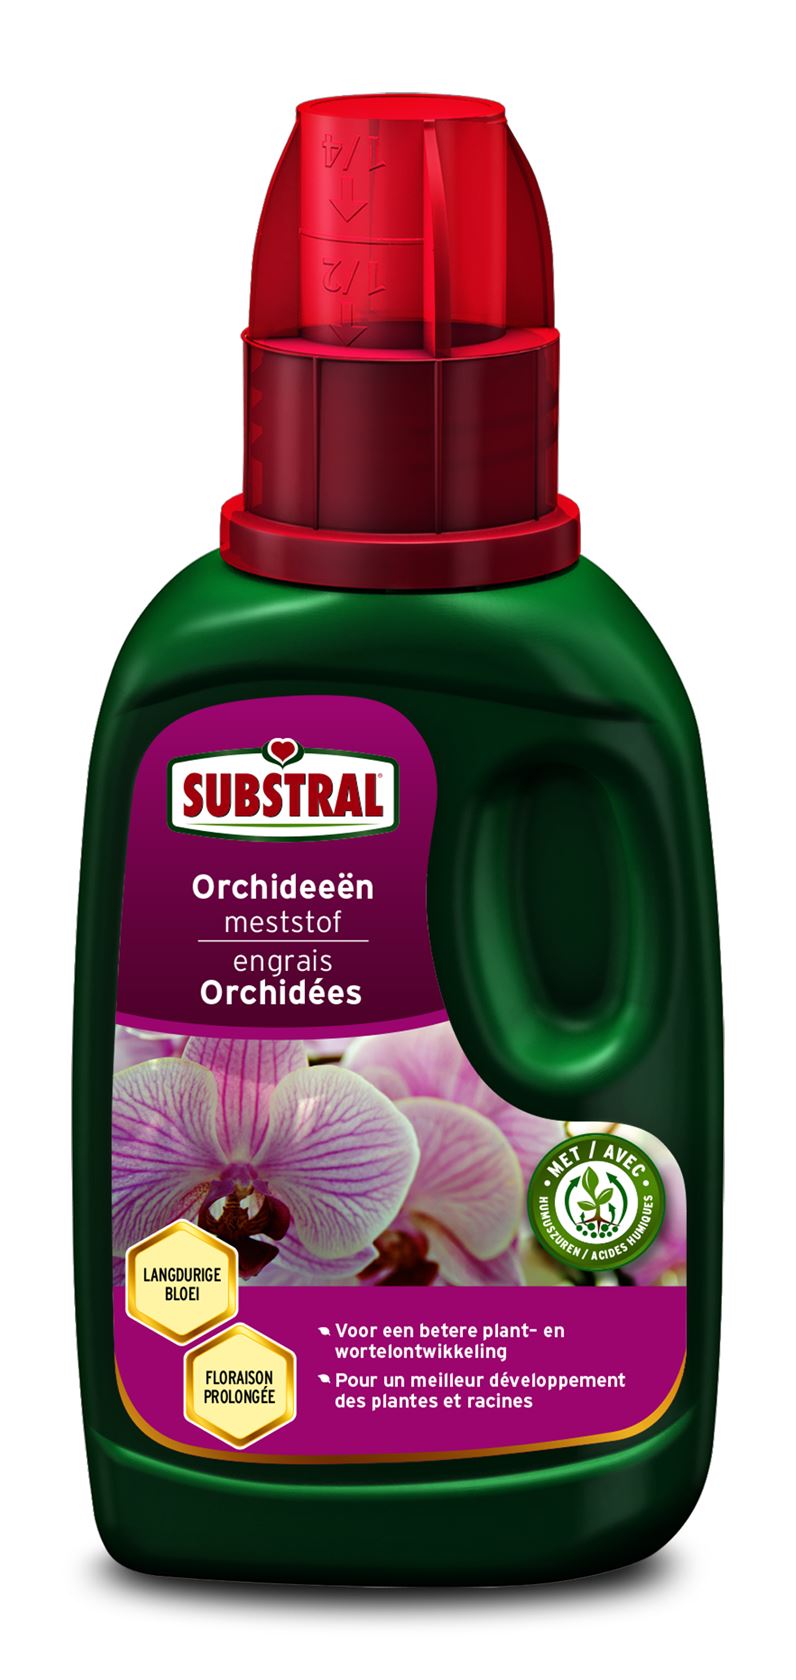 Substral-Orchideeenmeststof-250ml